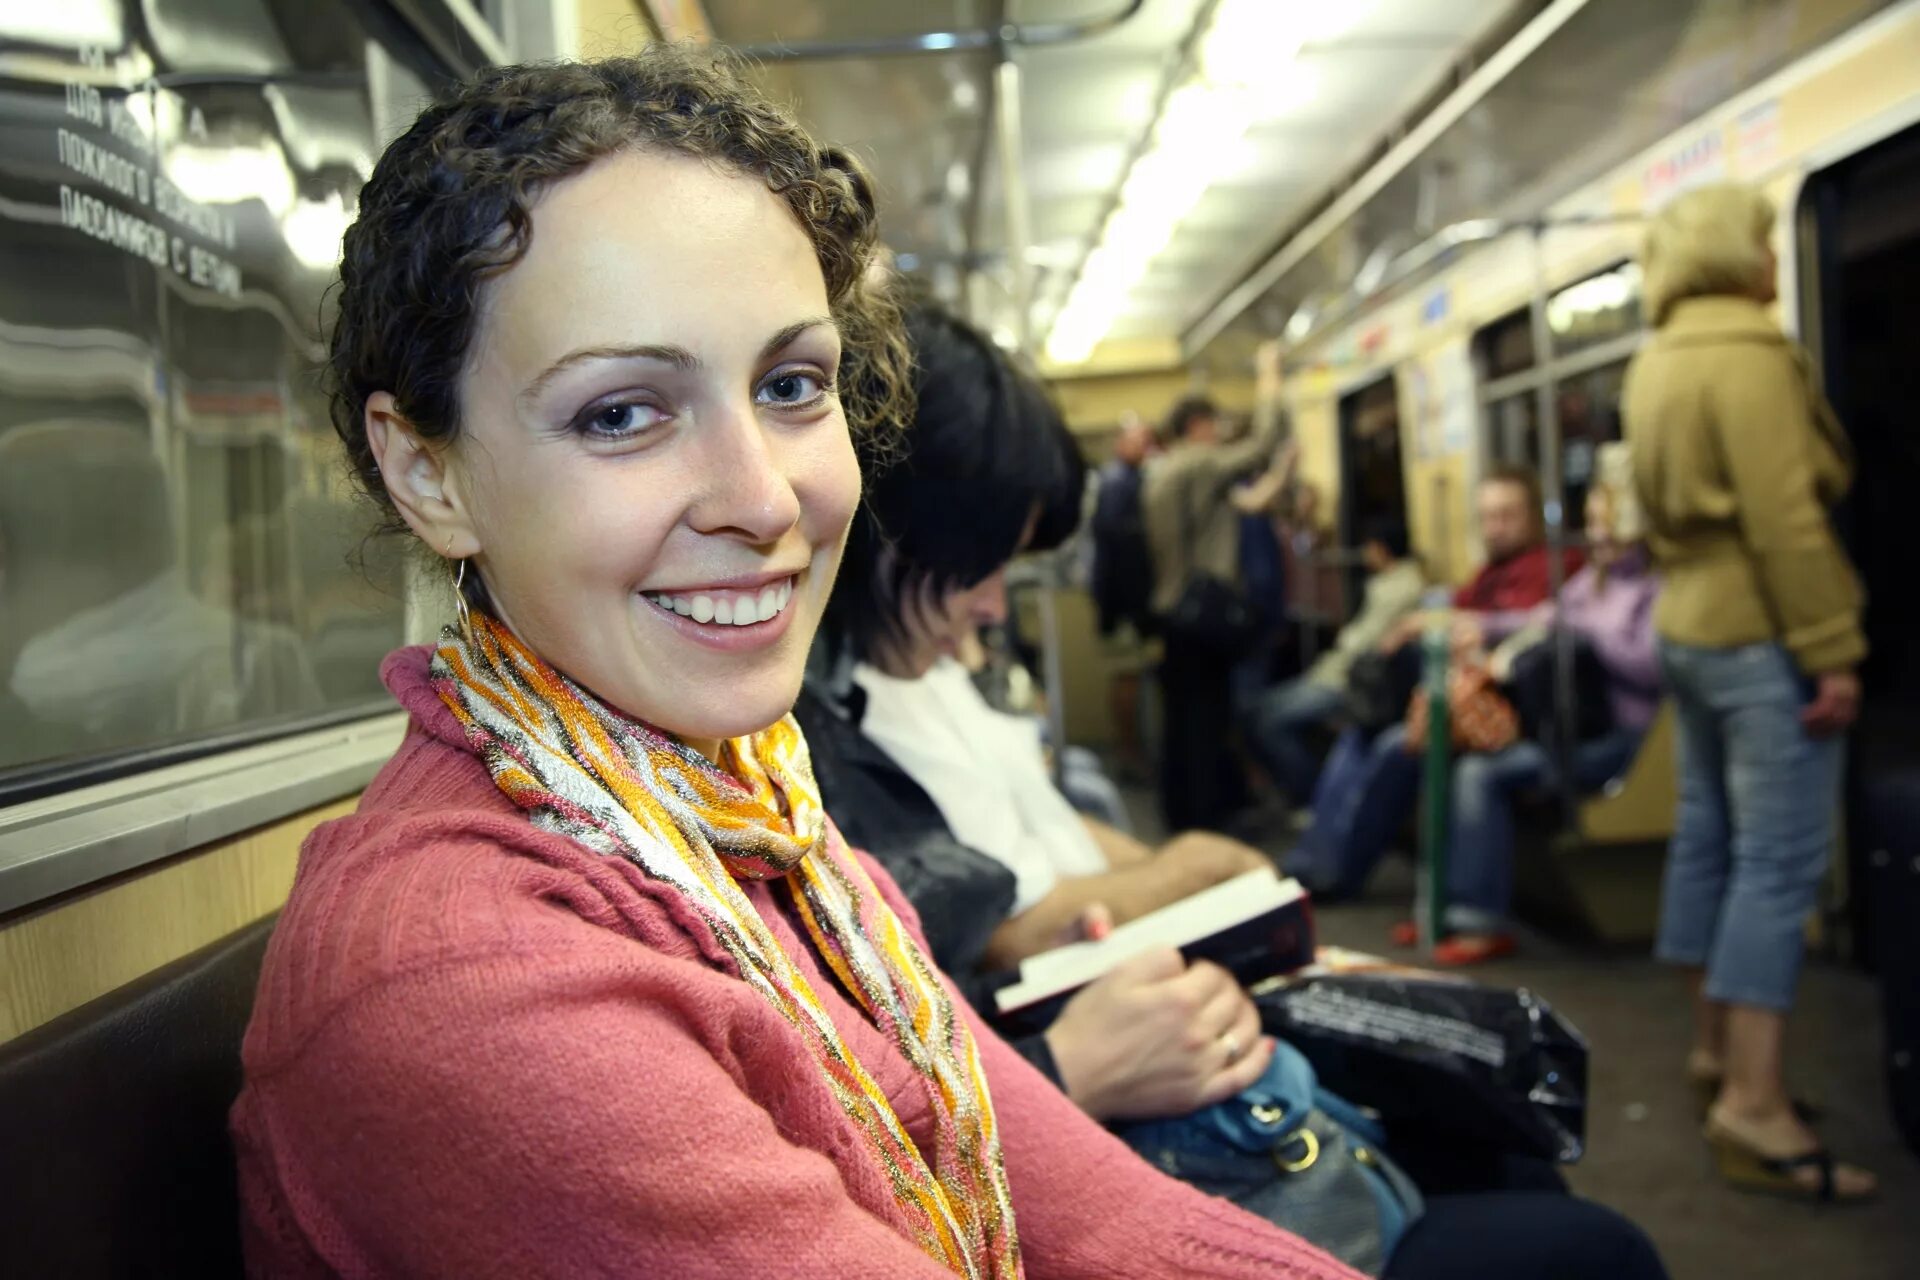 Девушки в метро. Люди улыбаются в метро. Девушка улыбается в метро. Обычные девушки в метро.